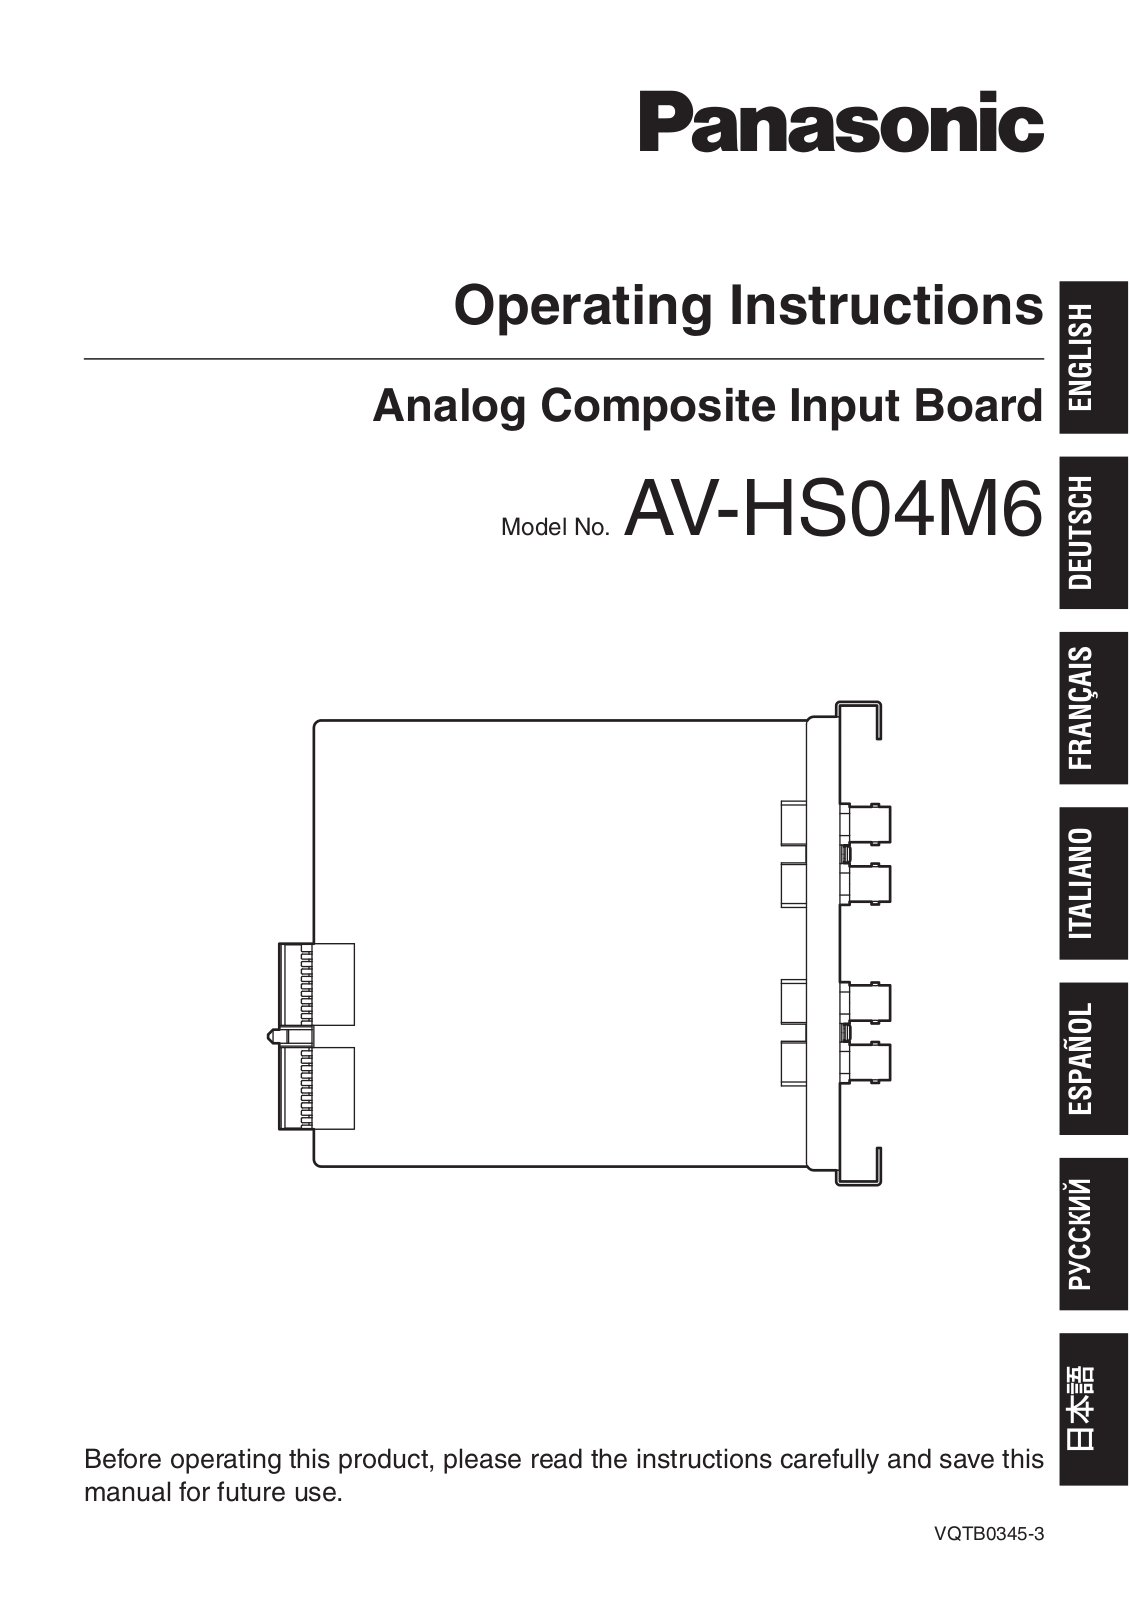 Panasonic av-hs04m6 operating instructions